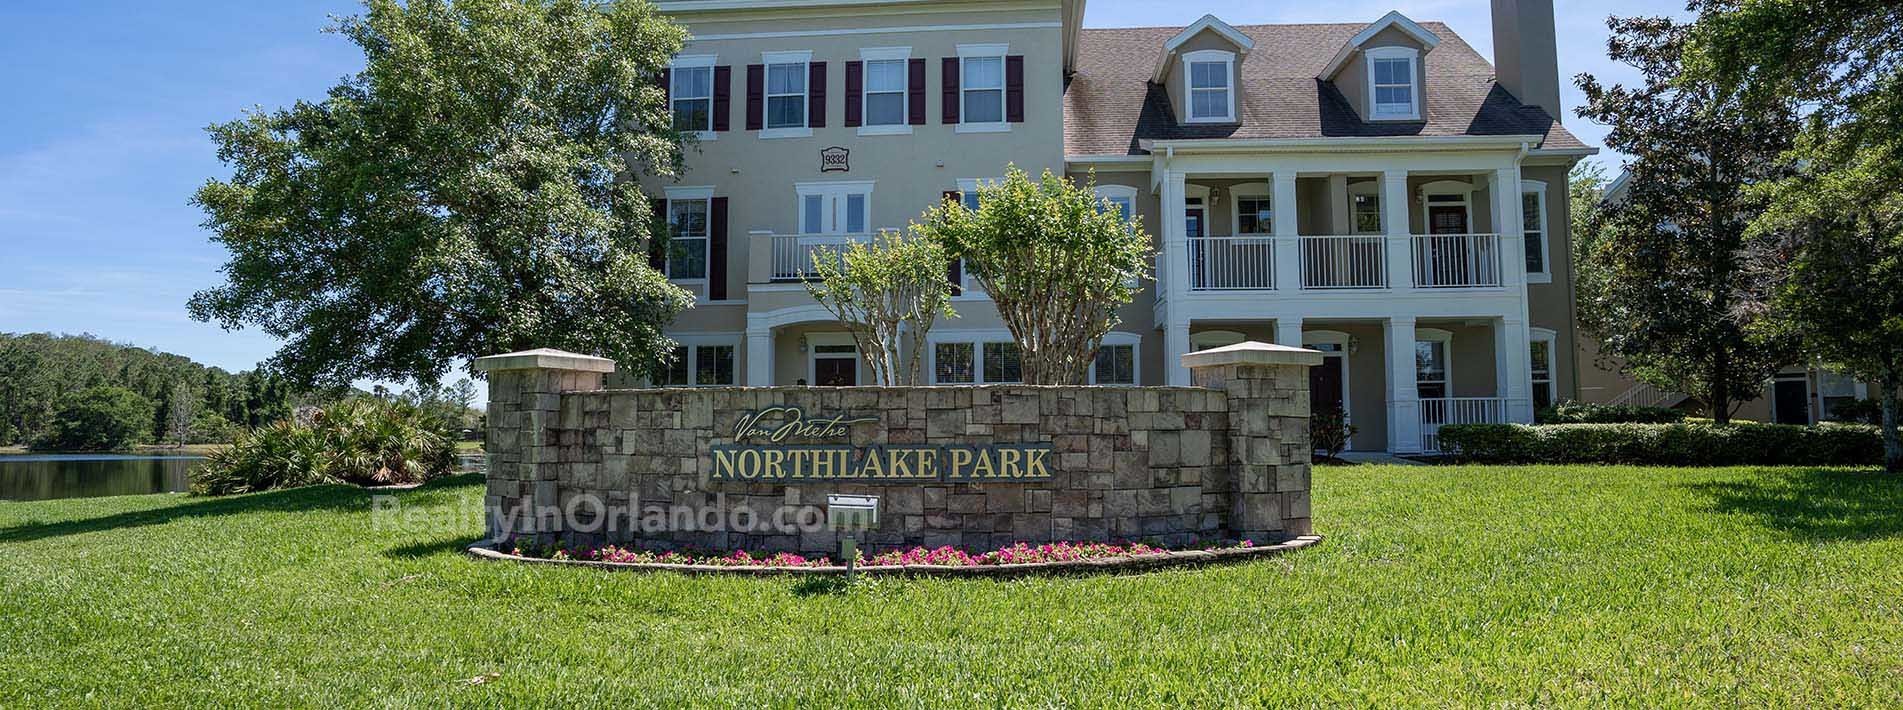 Northlake Park Lake Nona Real Estate